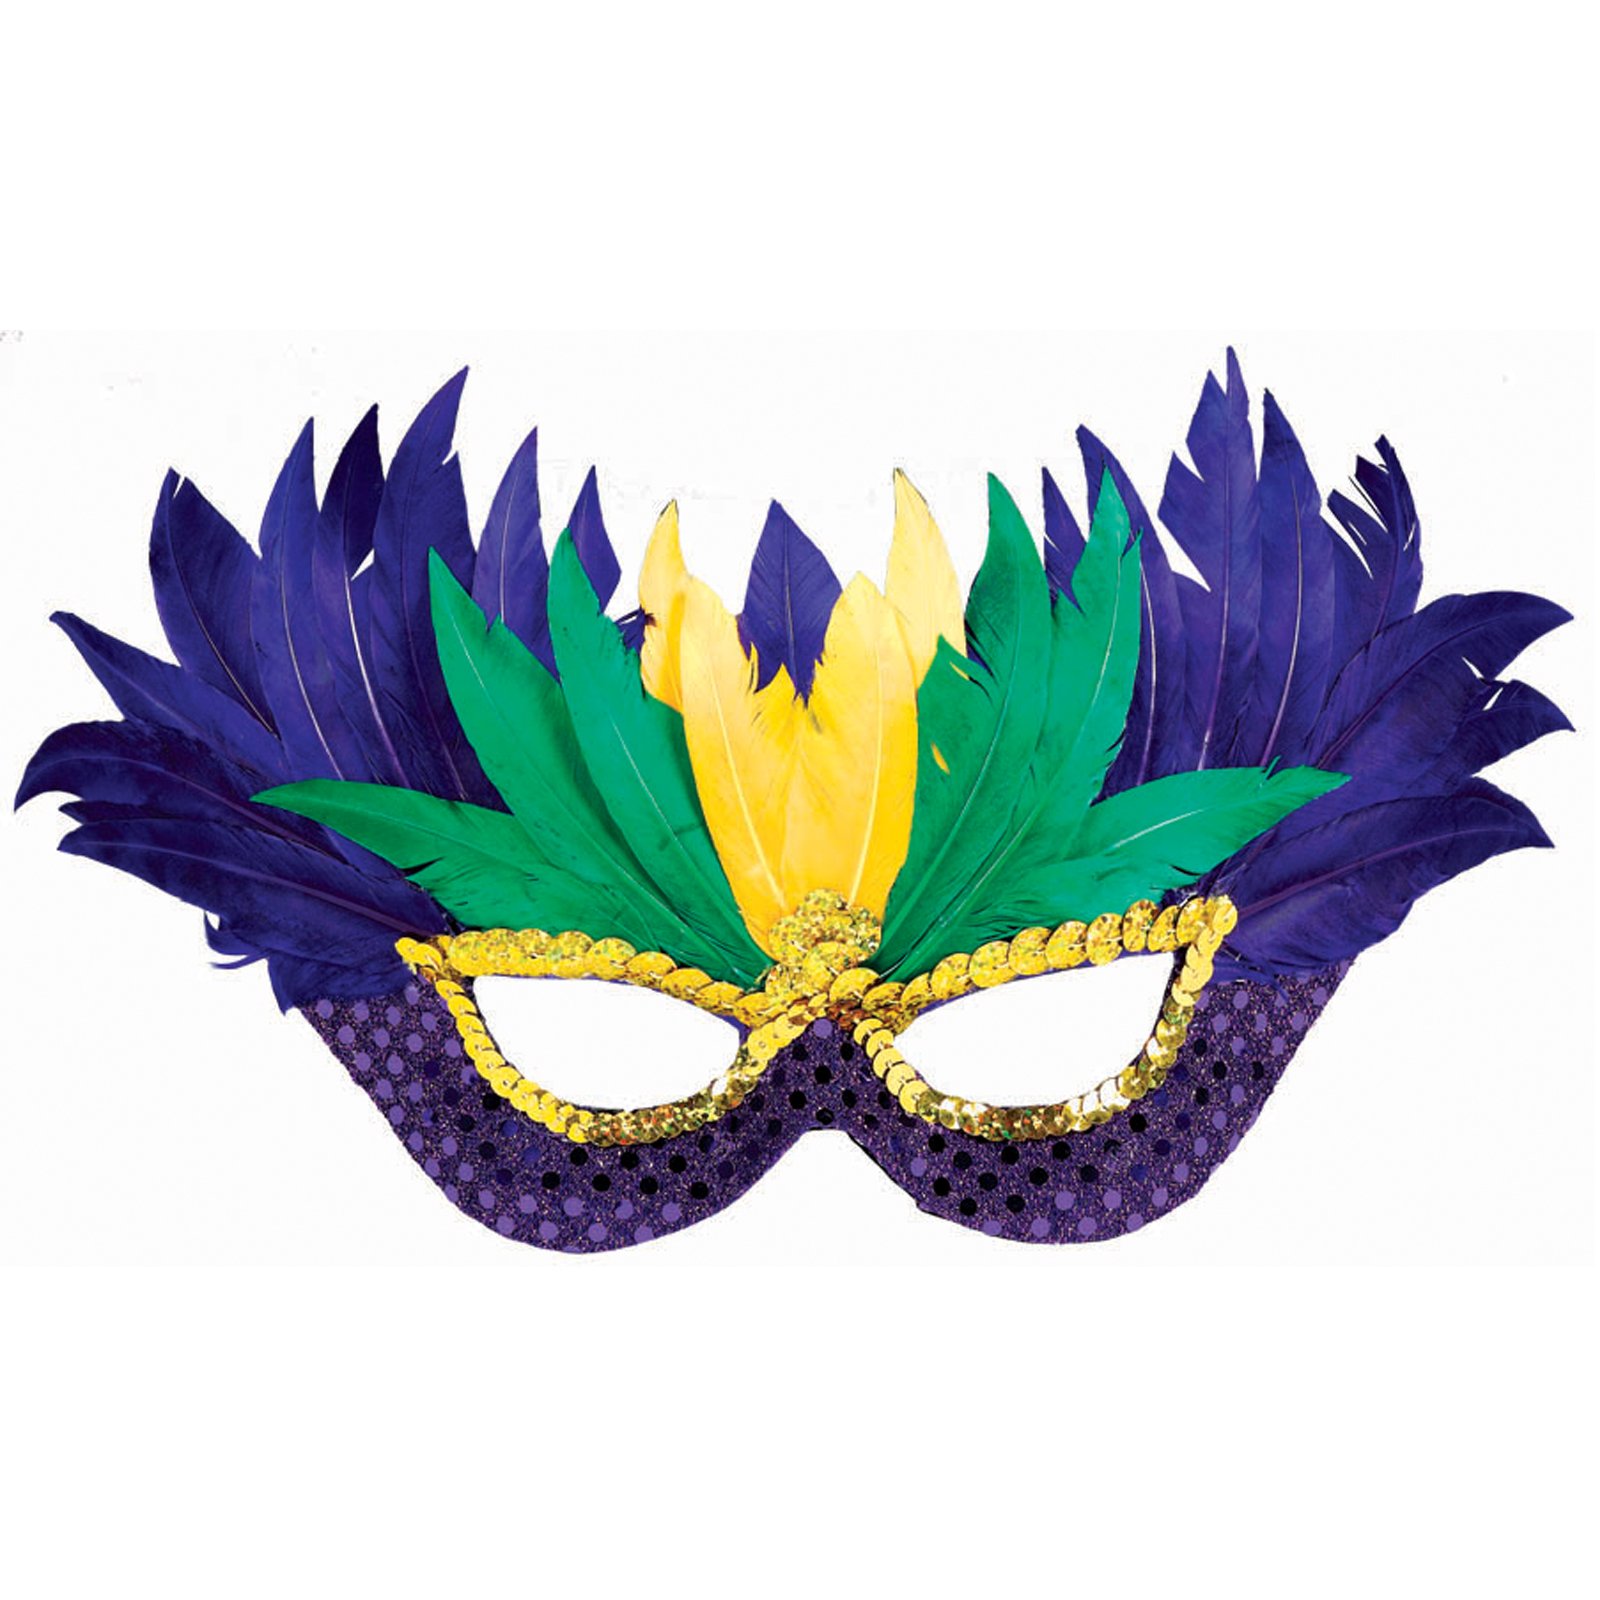 Mardi Gras mask design